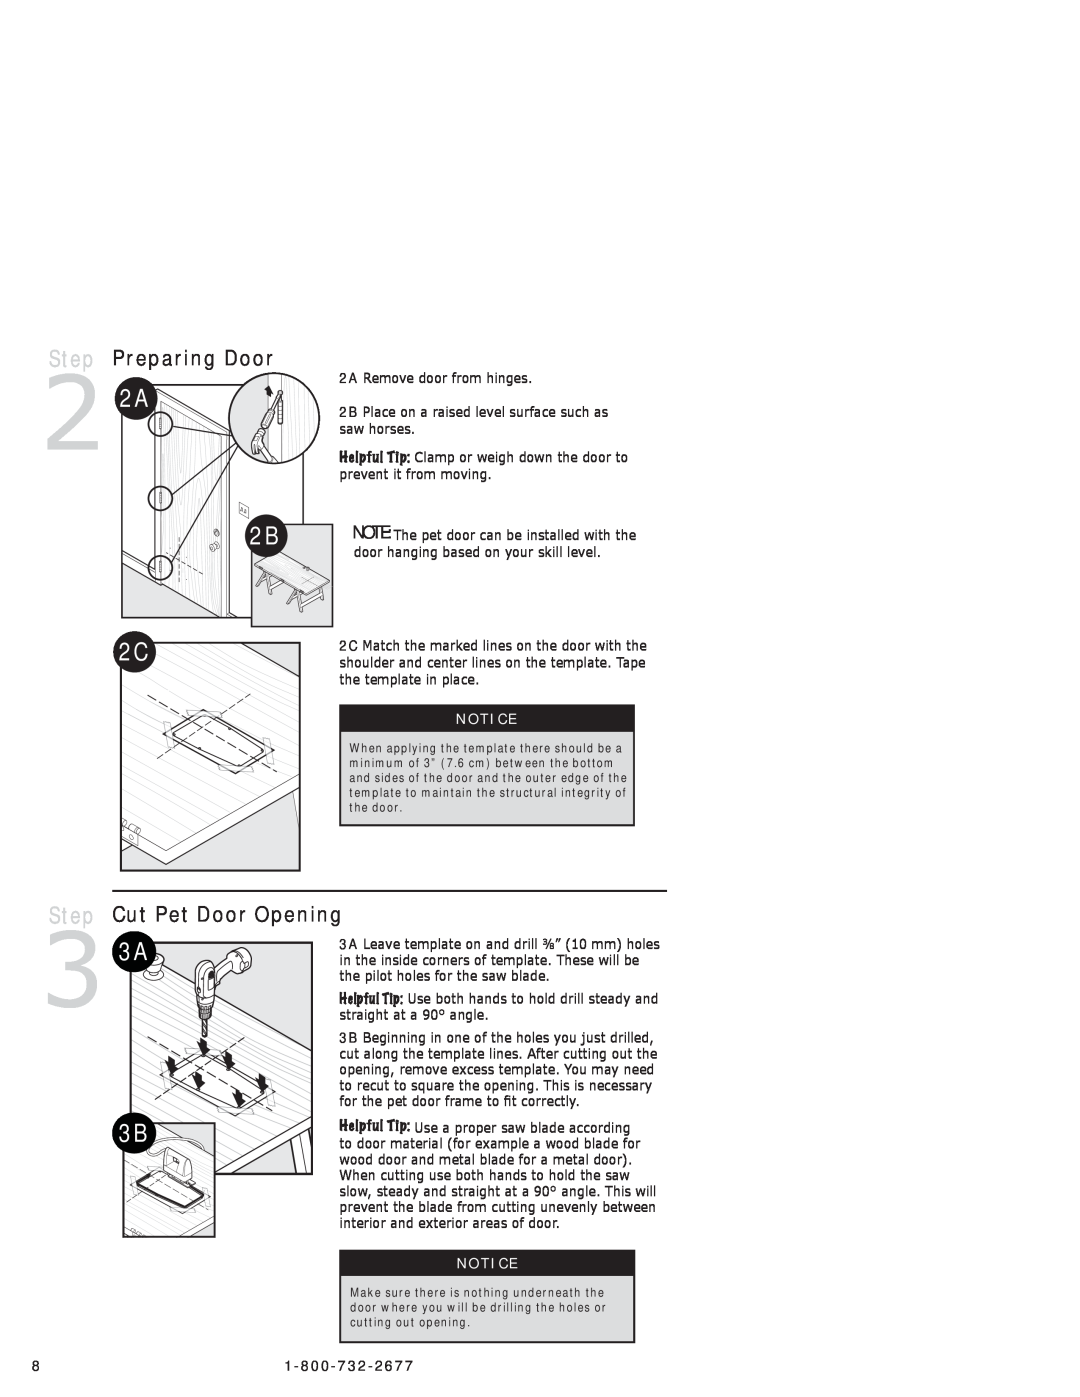 Petsafe PPA11-10711, PPA11-10709 manual Step, Cut Pet Door Opening, Preparing Door 